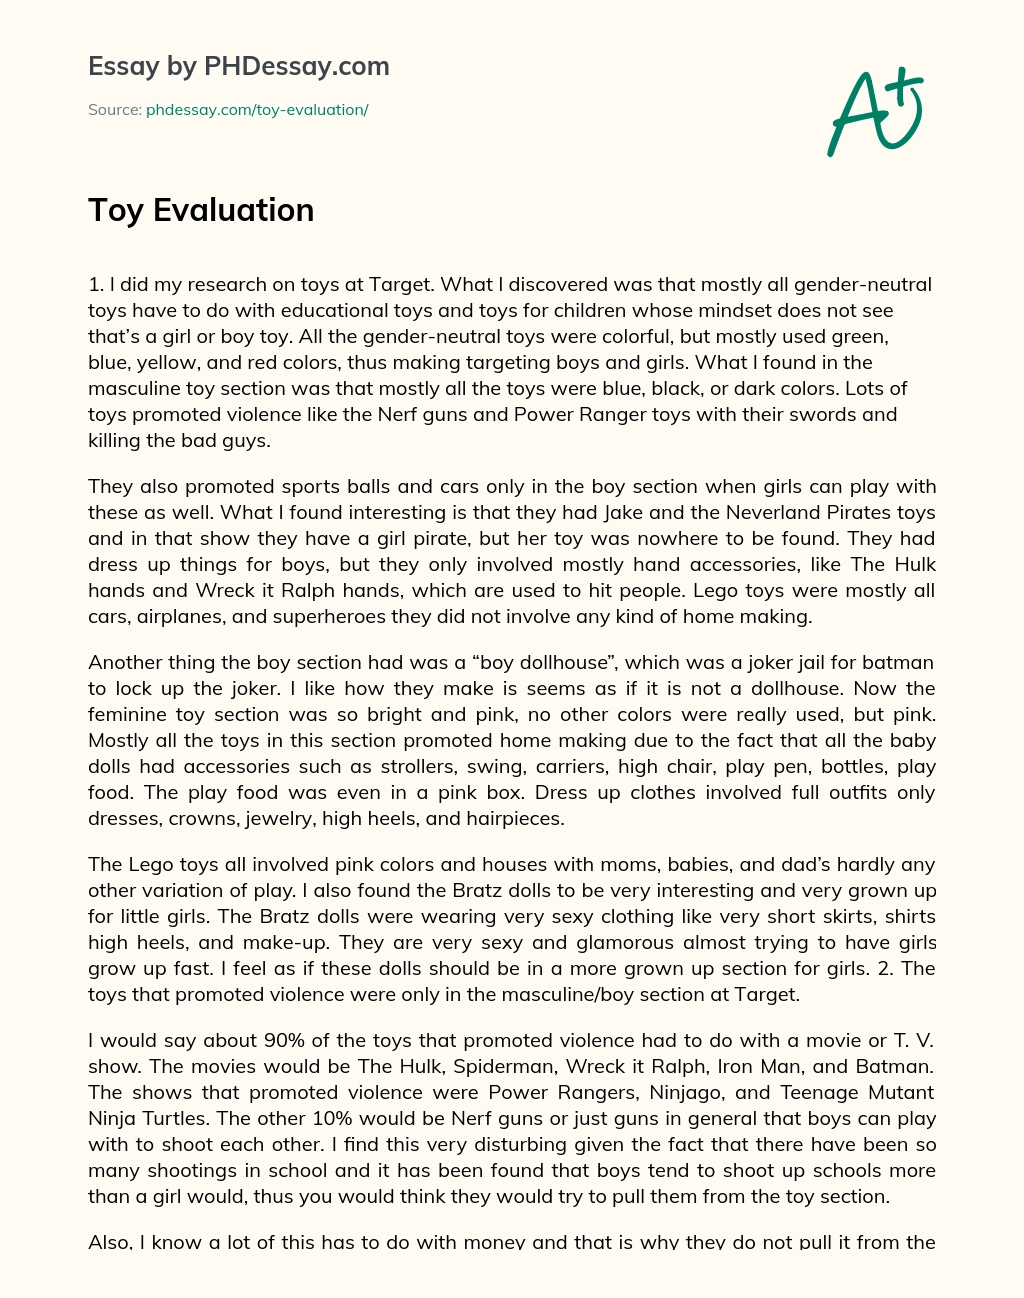 Toy Evaluation essay